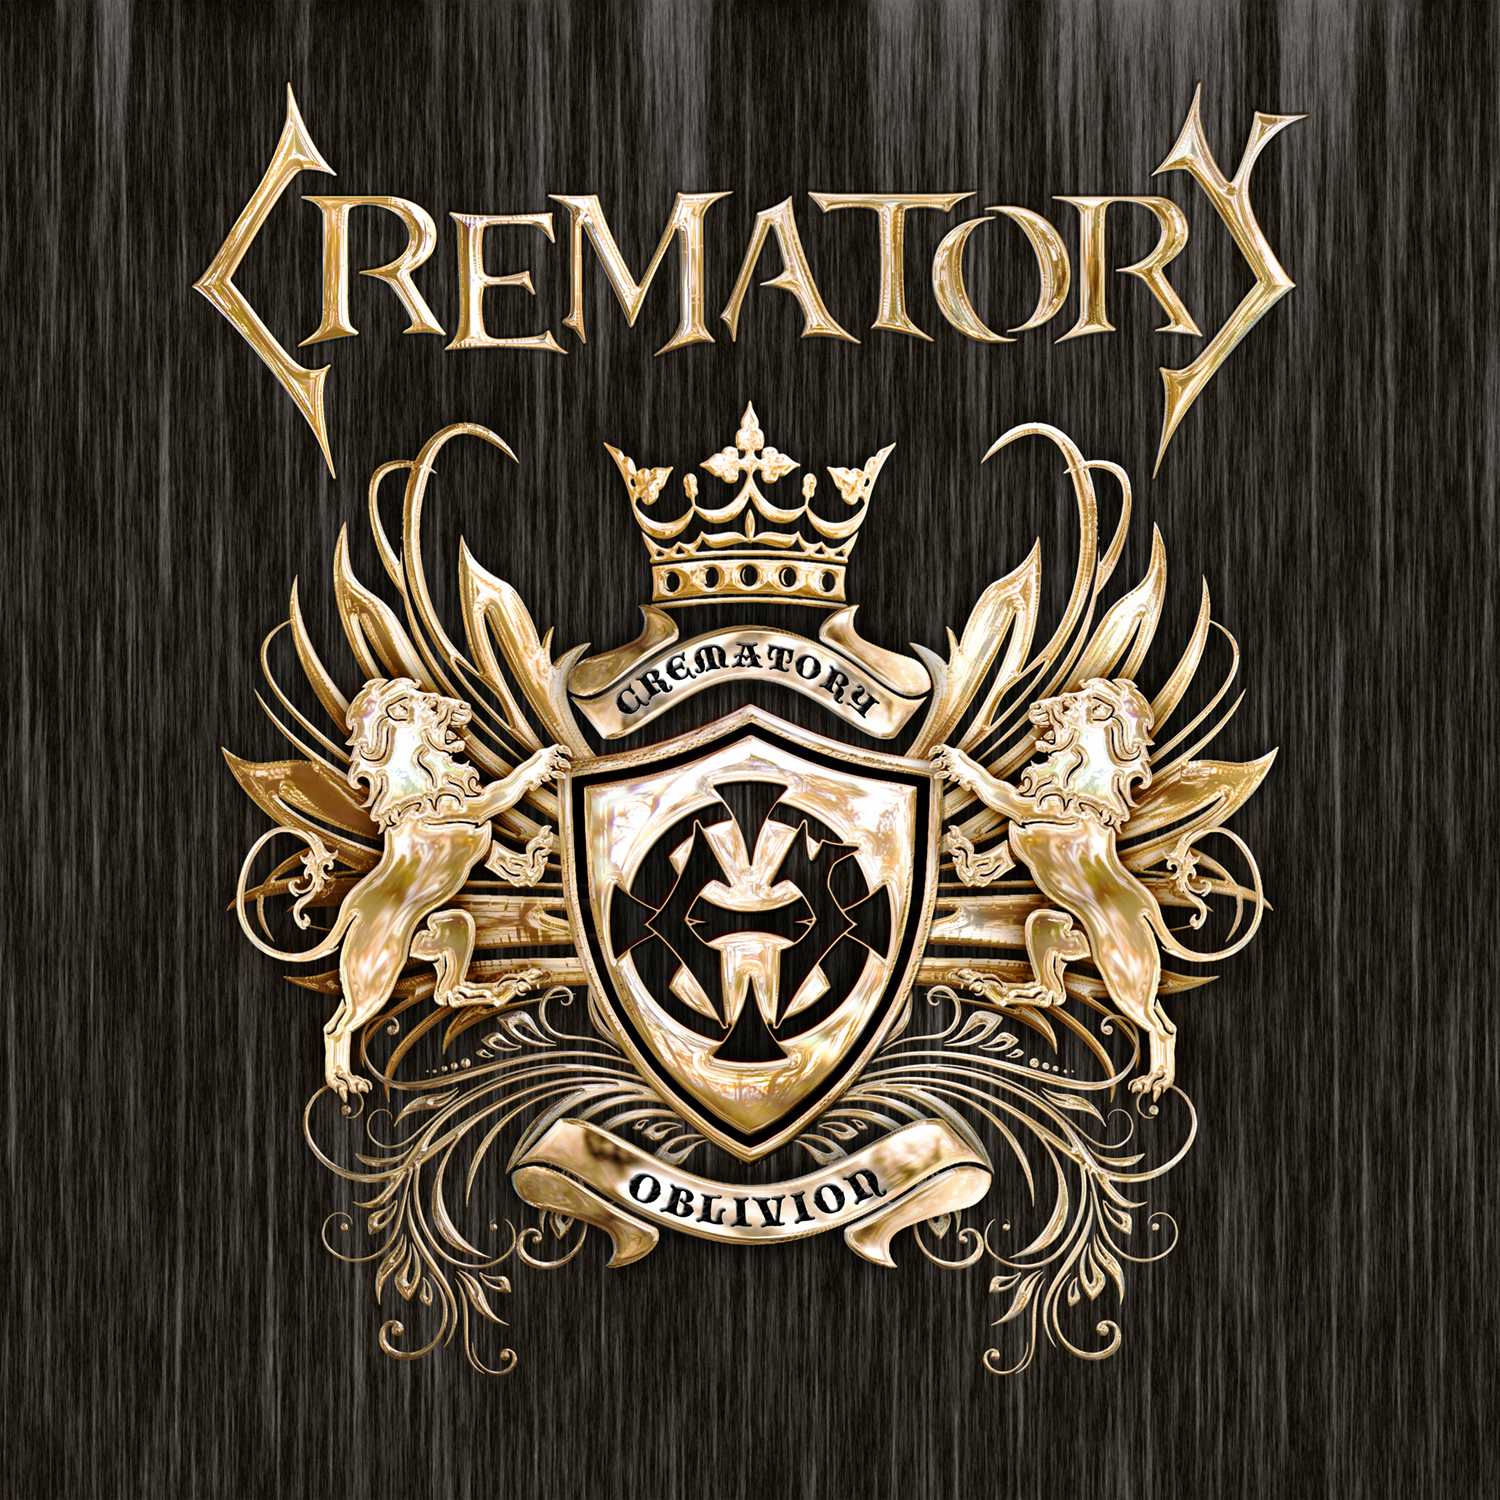 Crematory cover